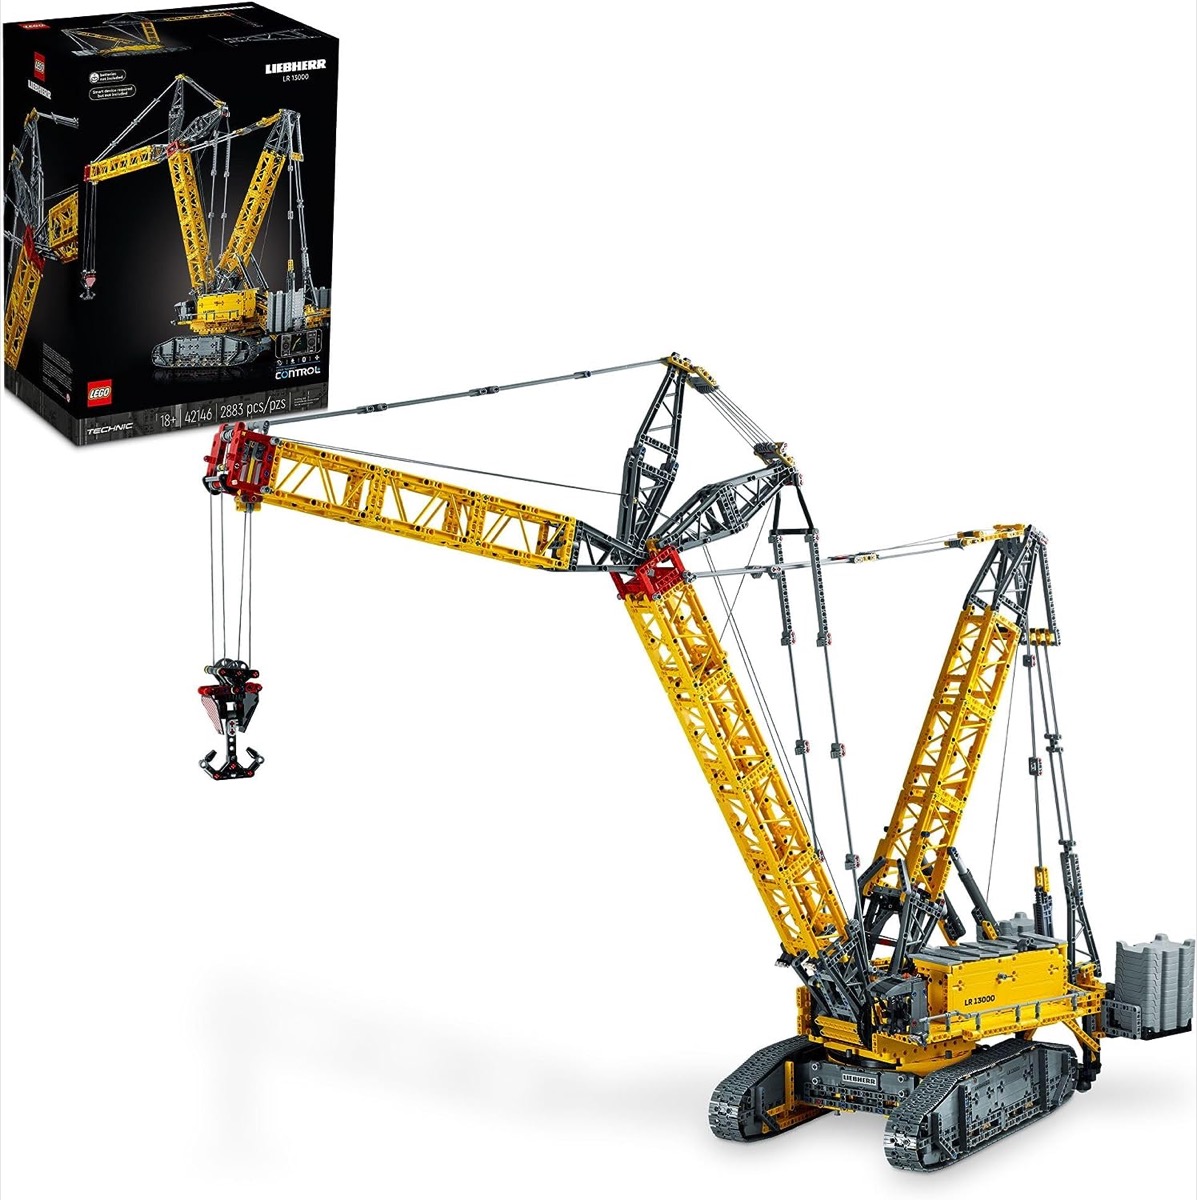 The LEGO Liebherr Crawler Crane model with box